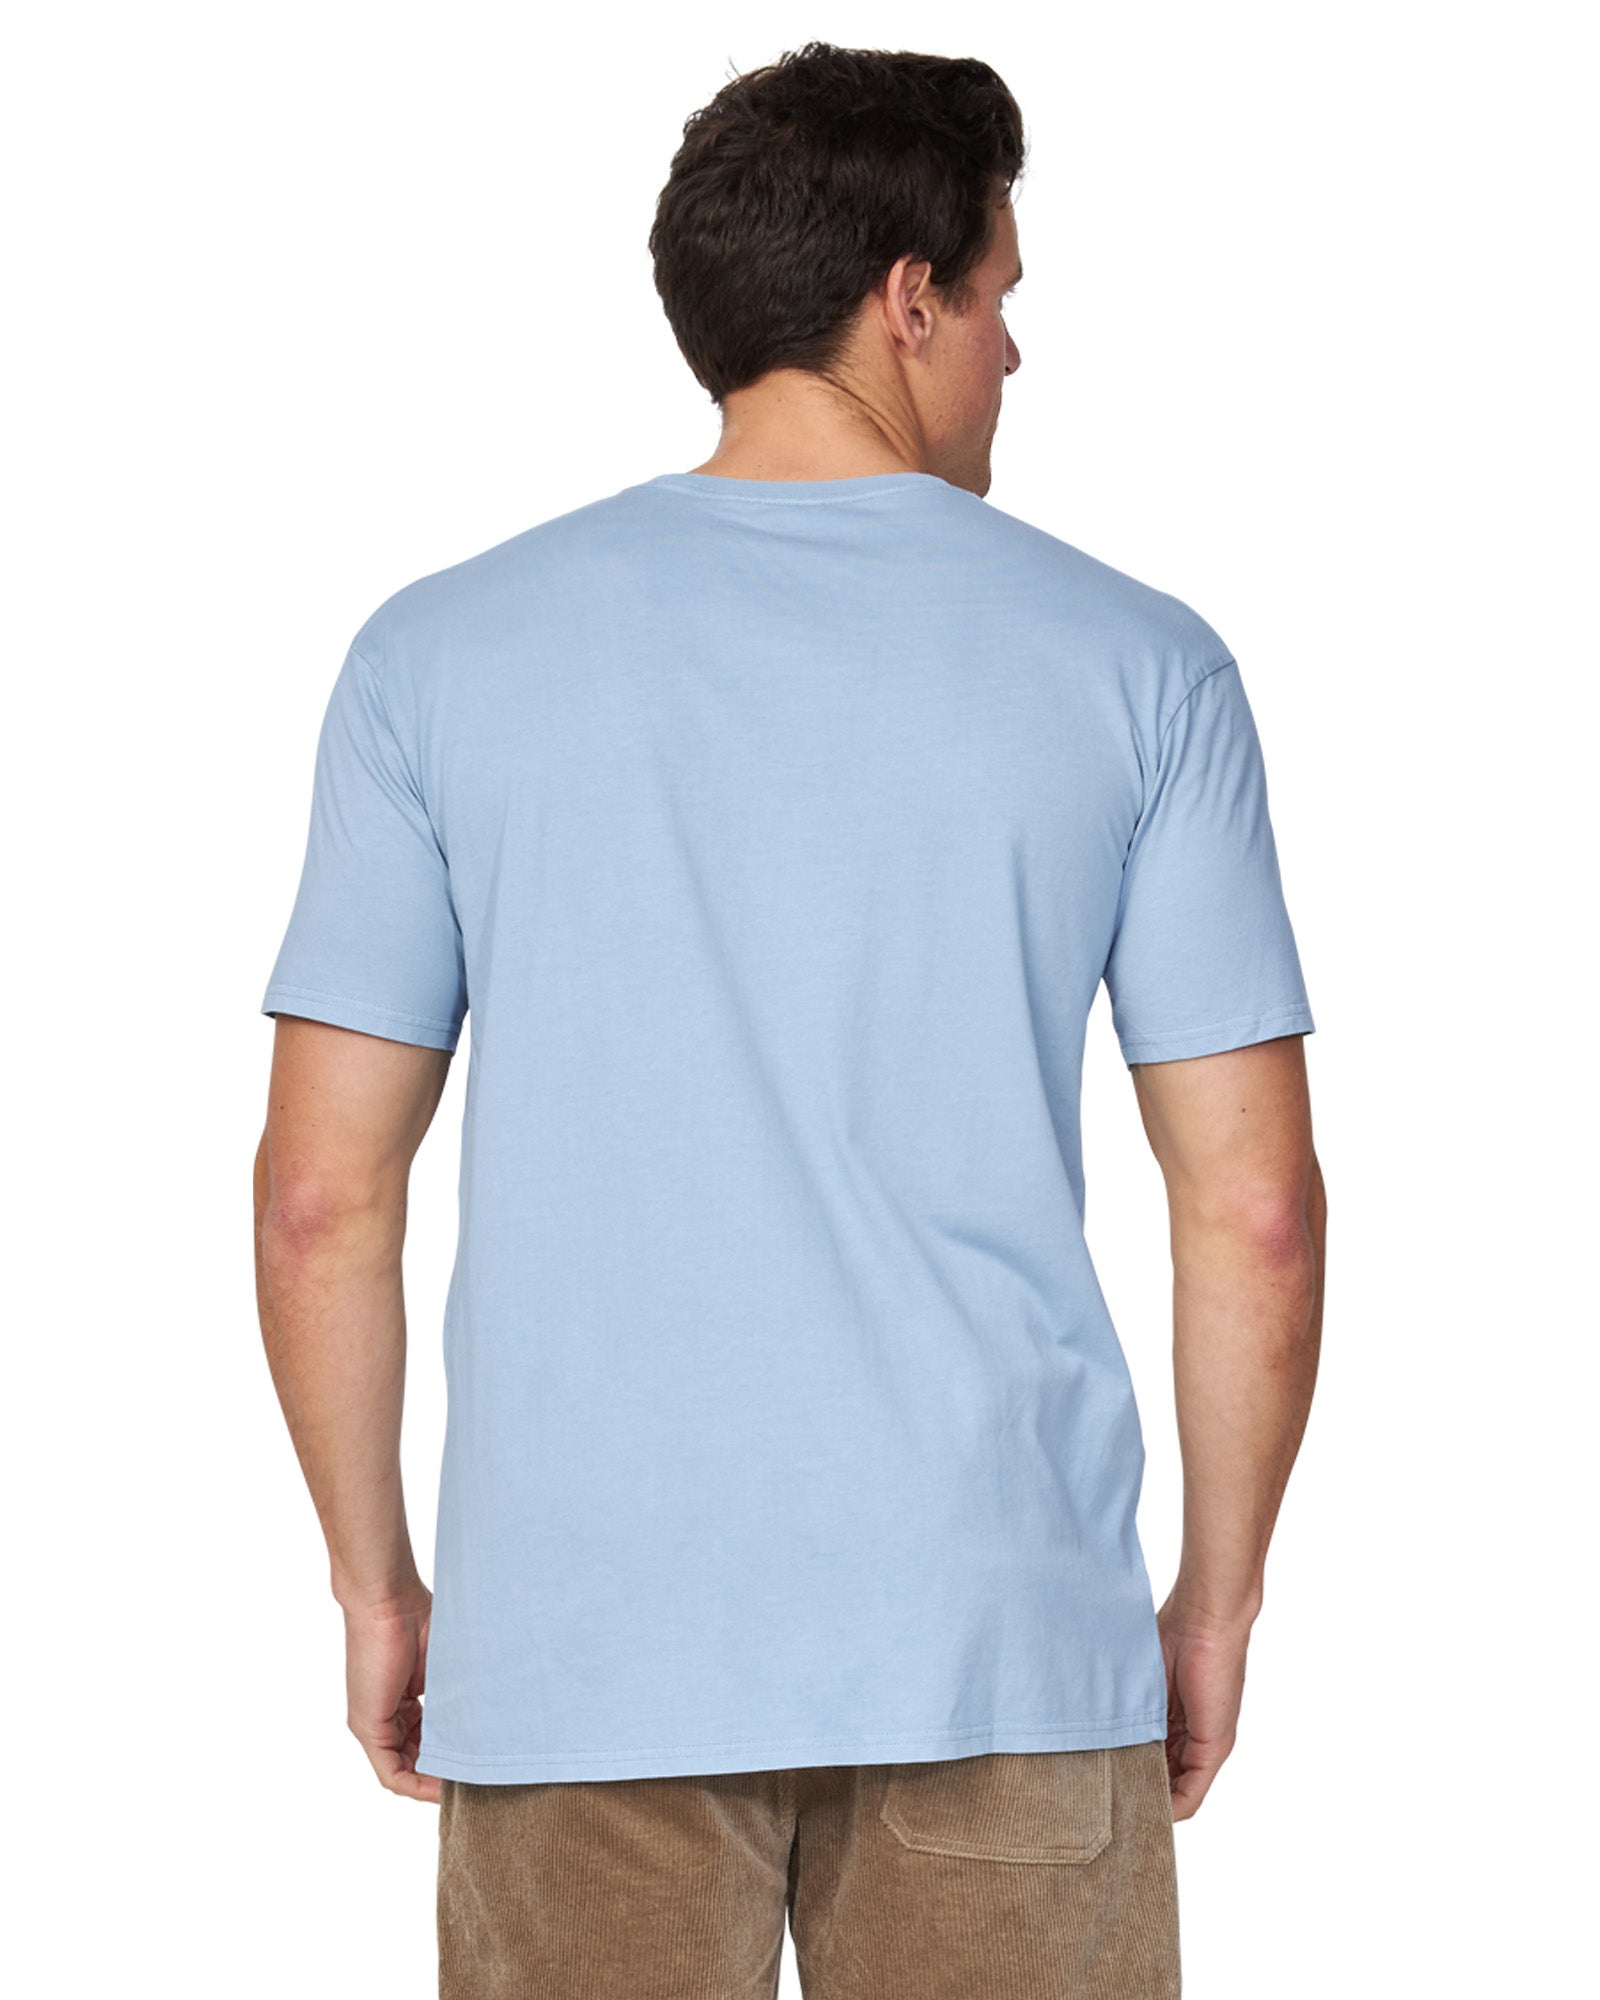 Mens - T-Shirt - Staple Tee - Steel Blue